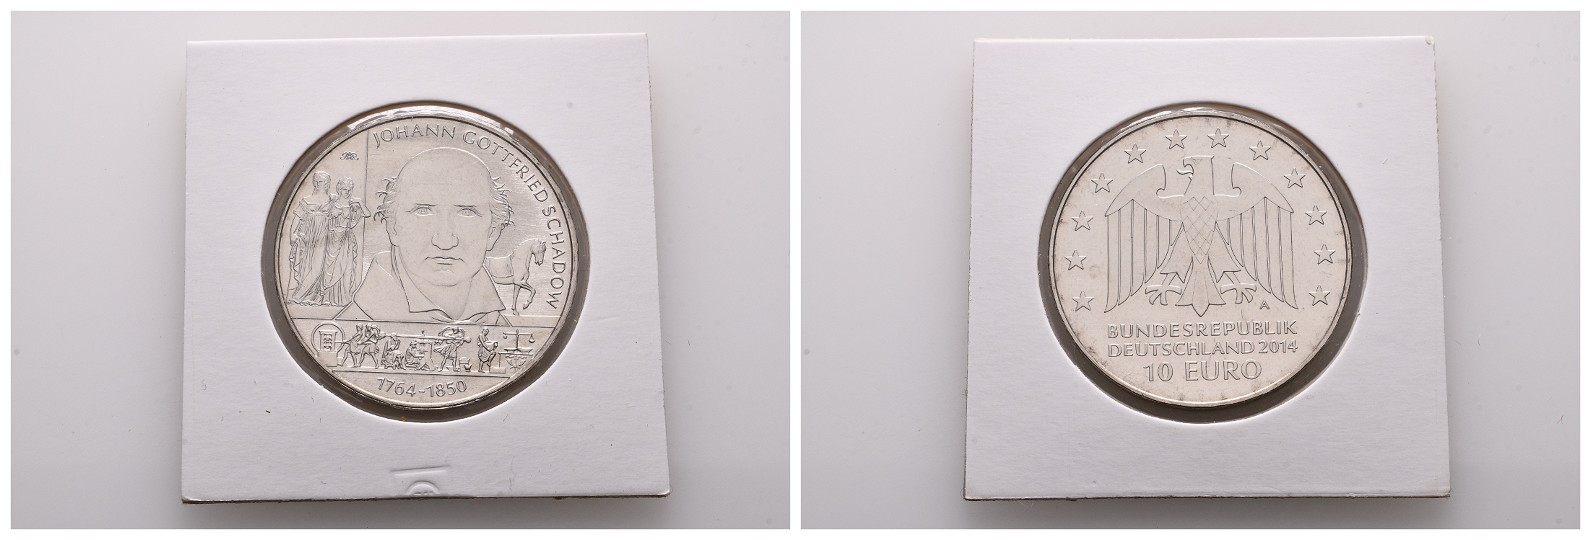  MGS Irland KMS Kursmünzensatz 2004 3,88 Euro in original Folder   